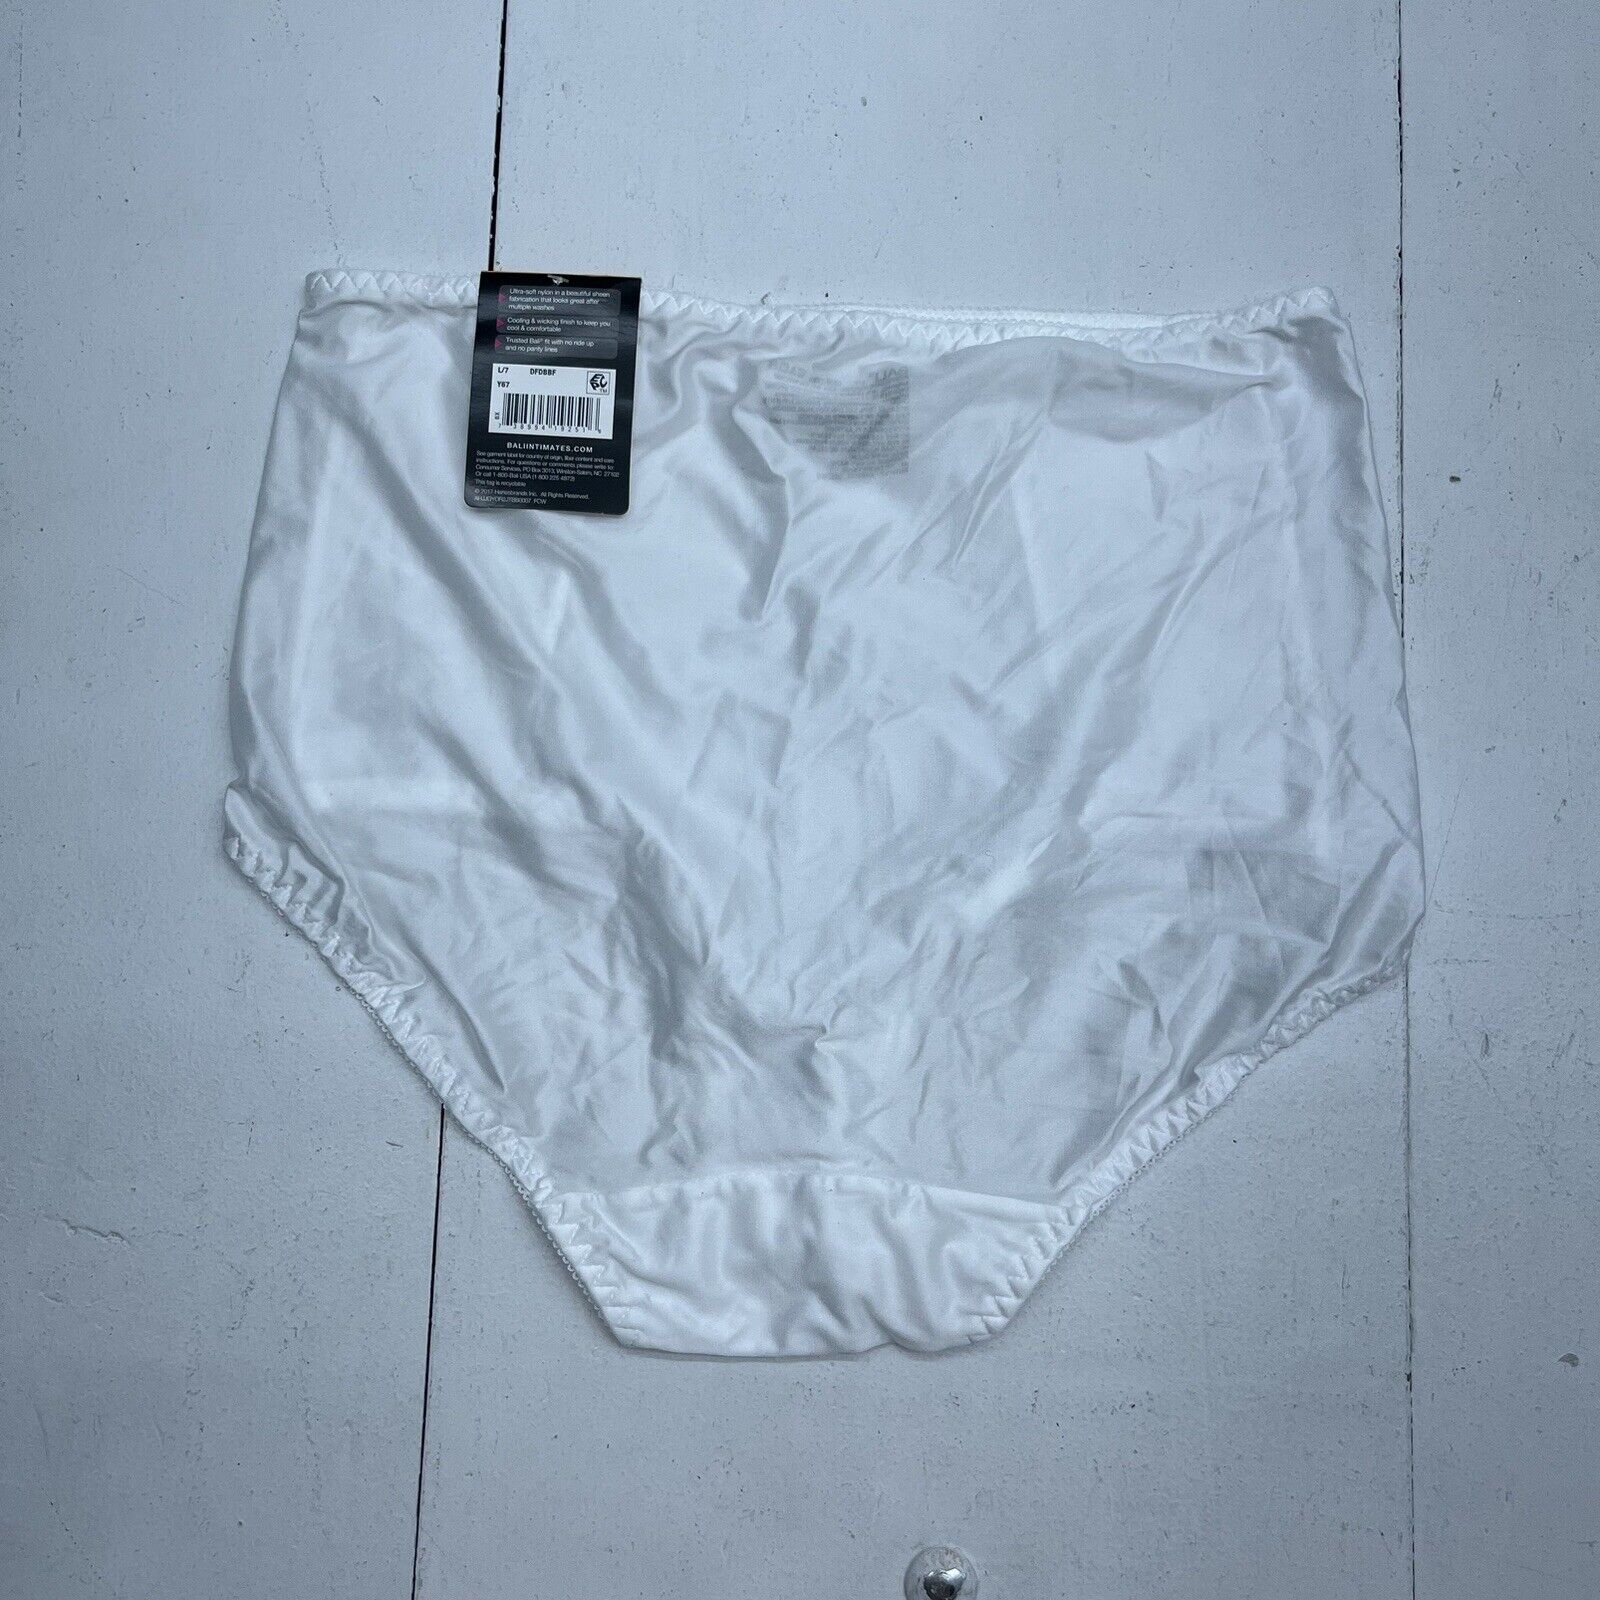 Bali USA Panties for Women